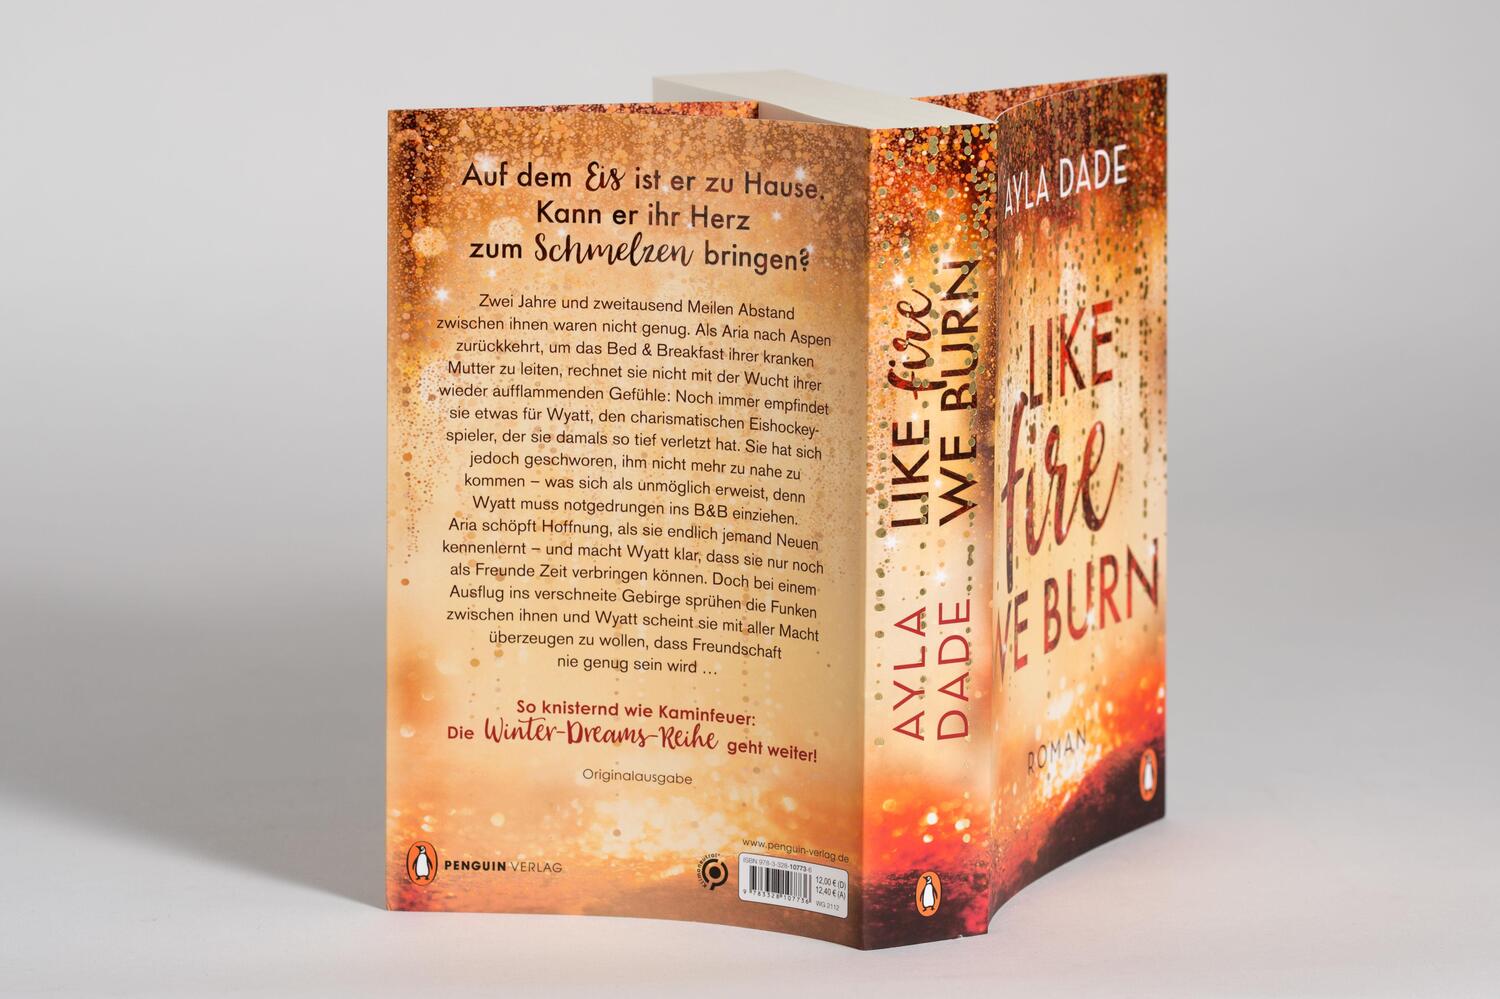 Bild: 9783328107736 | Like Fire We Burn | Roman. Knisternde New-Adult-Bestsellerromantik